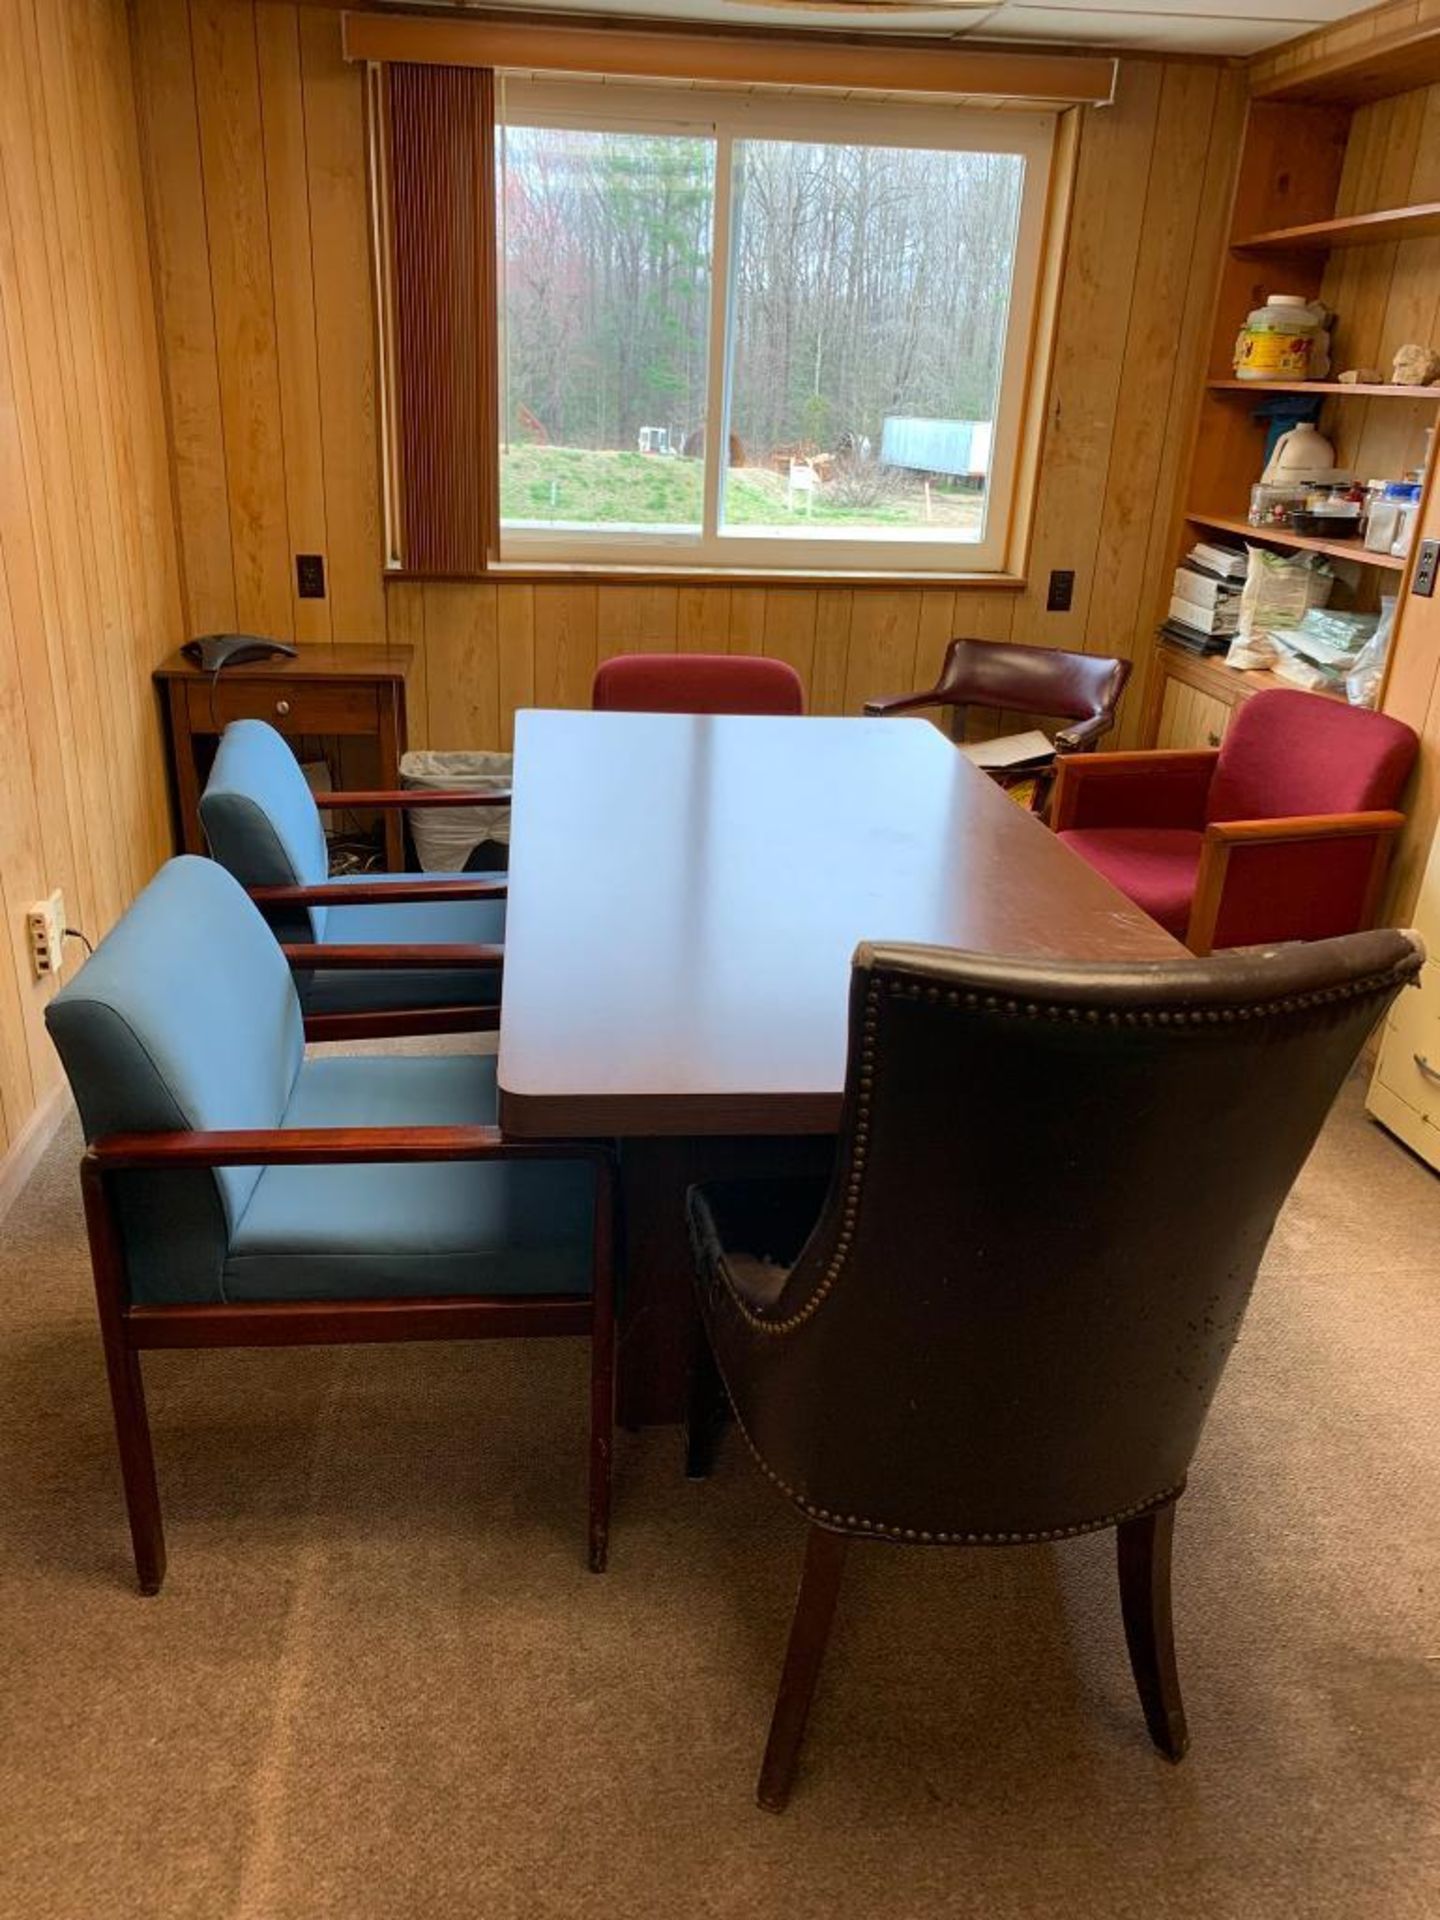 Conference Room Furniture